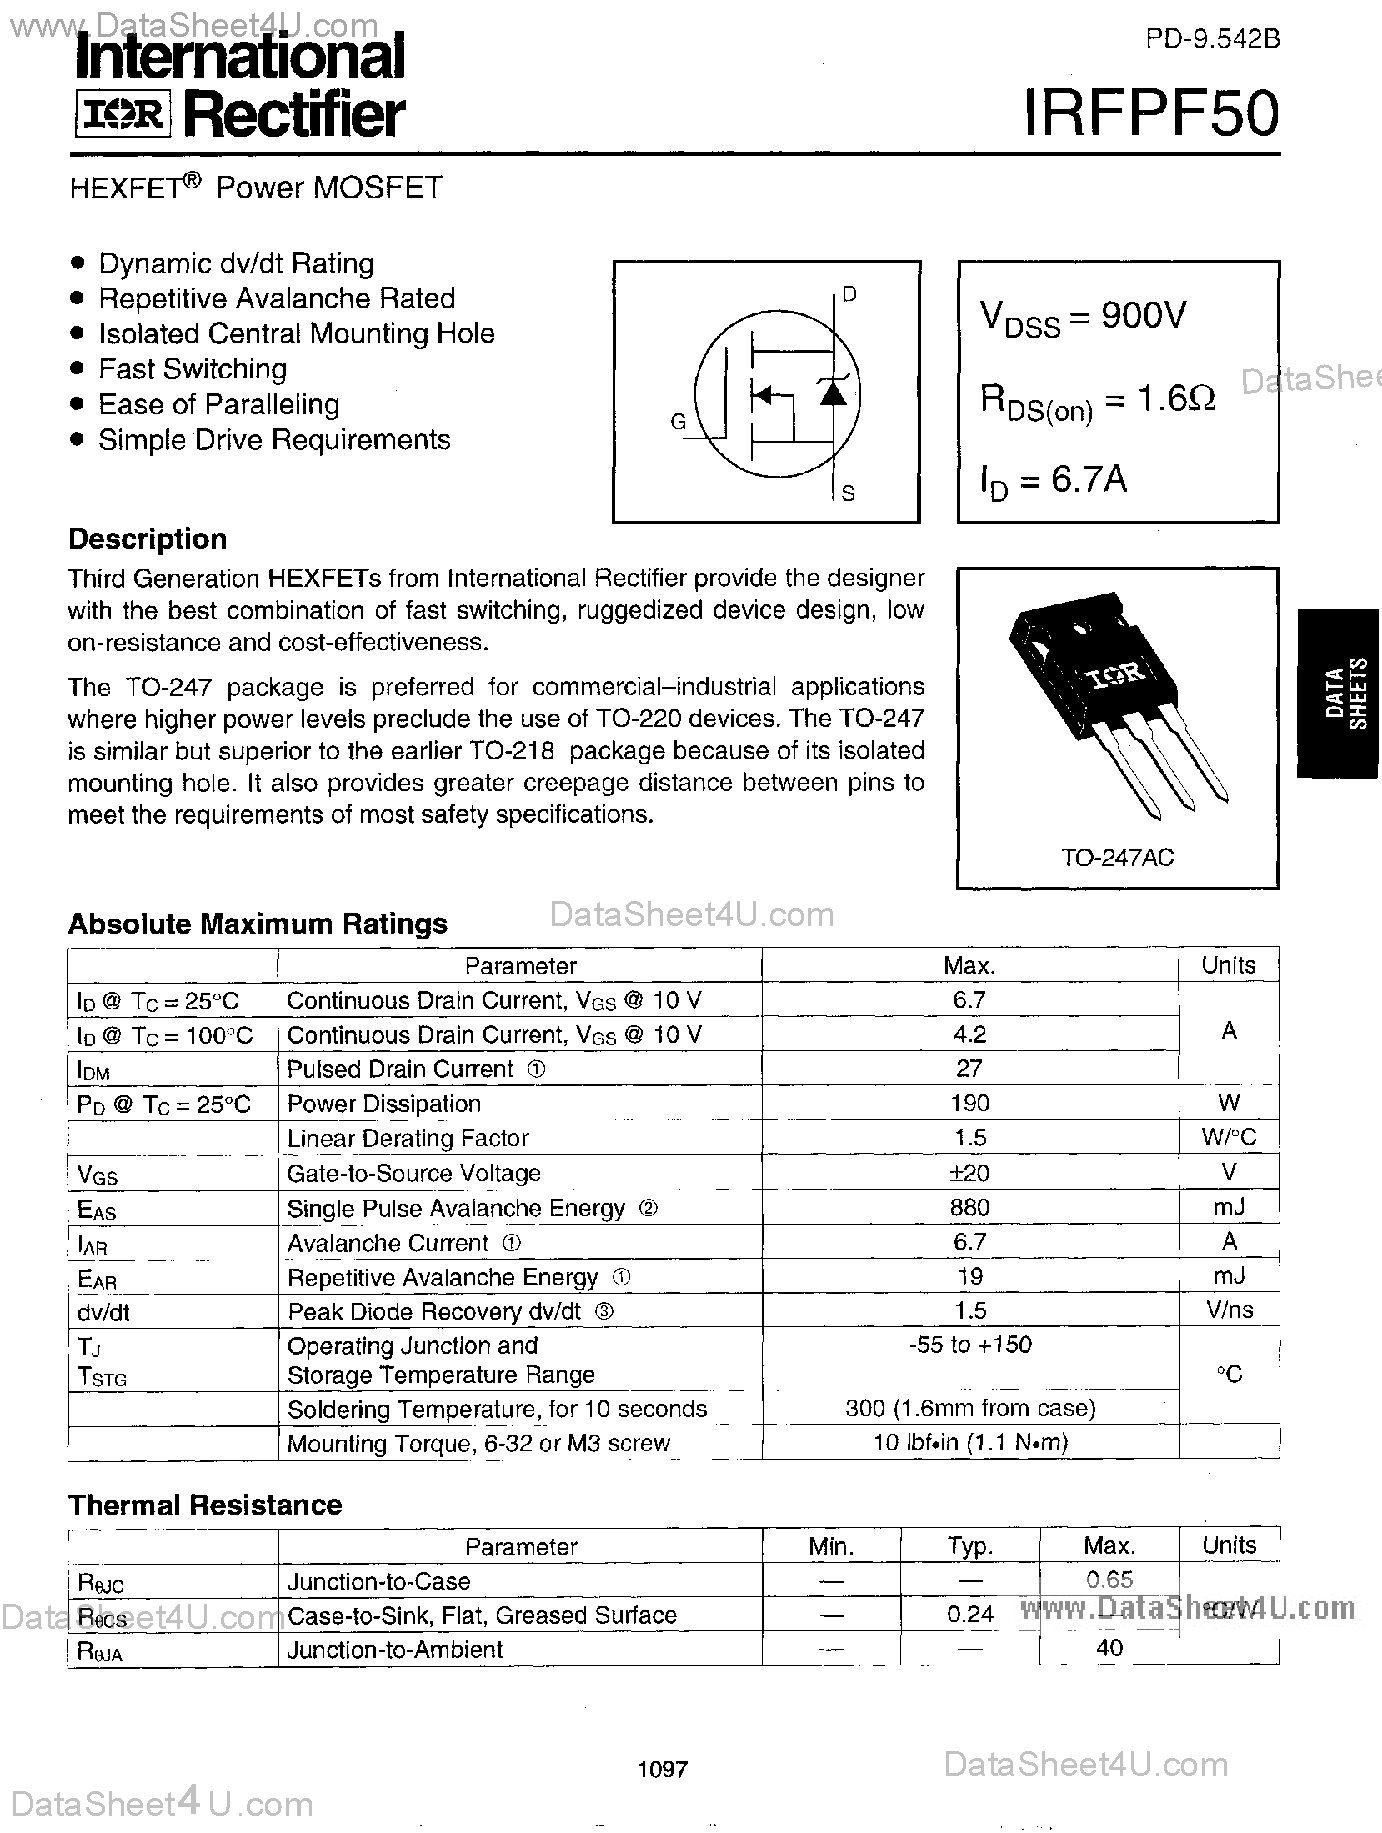 Datasheet IRFPF50 - Power MOSFET page 1